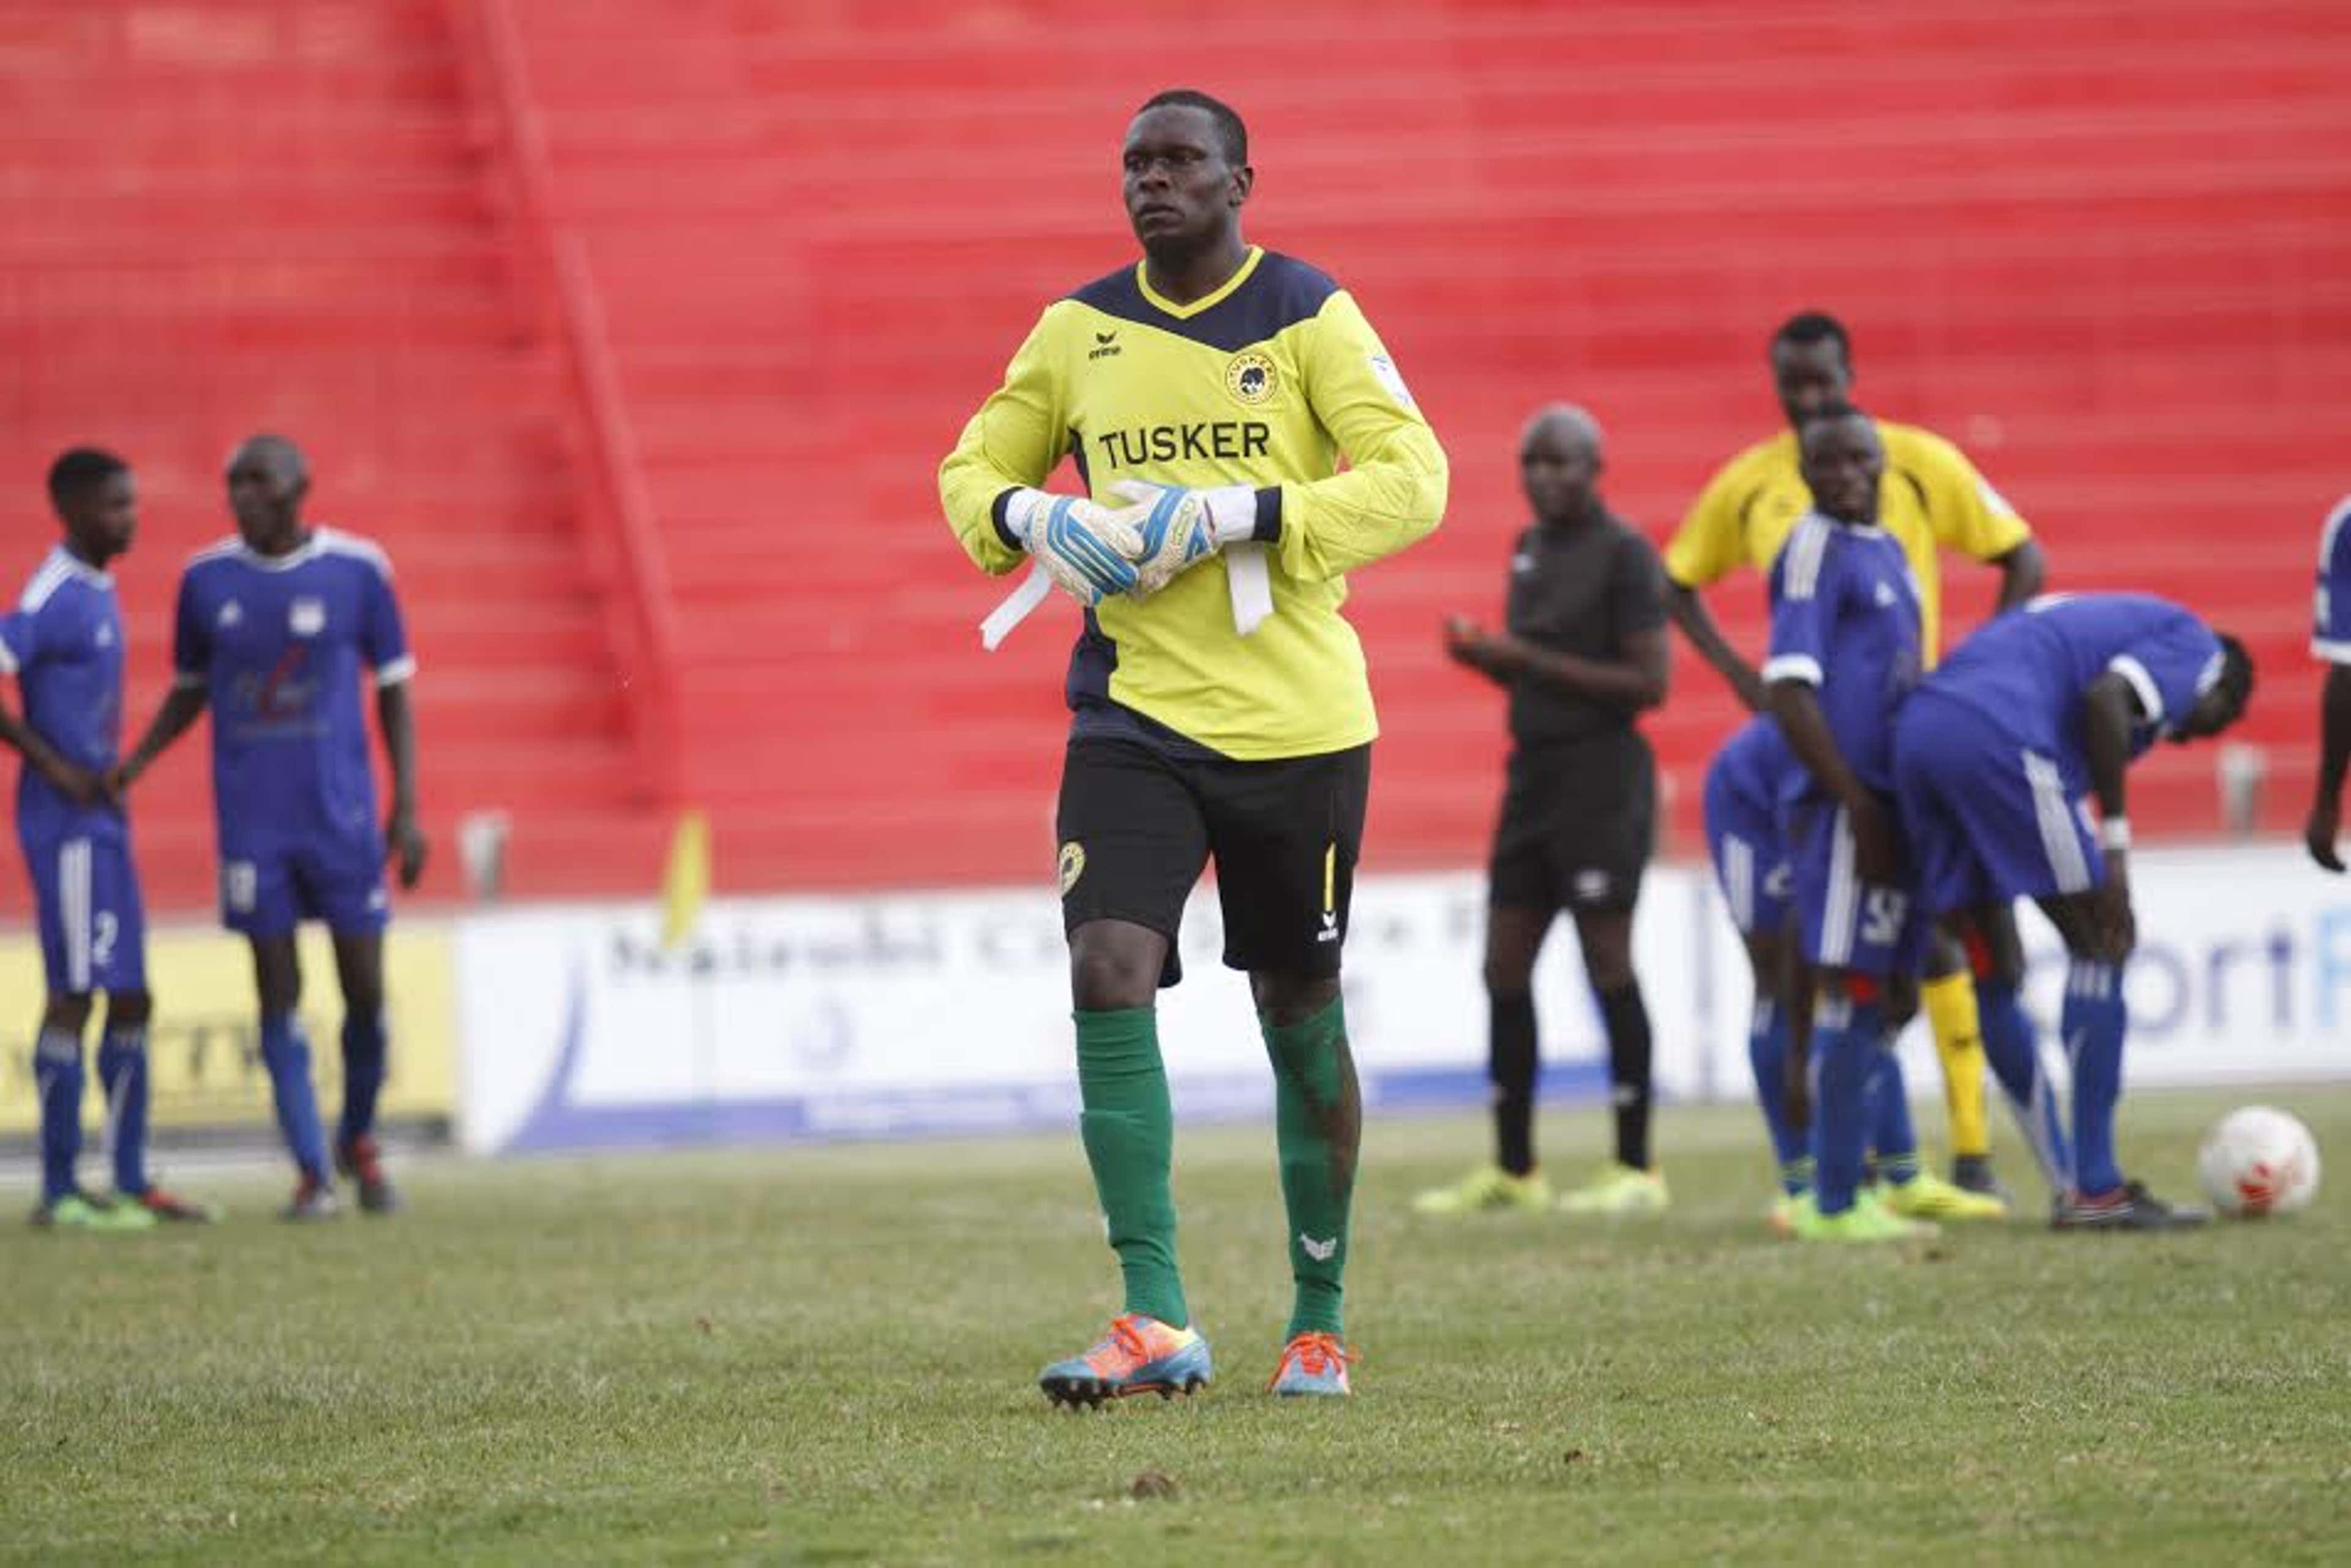 Tusker goalkeeper Duncan Ochieng was red carded against Nairobi City Stars